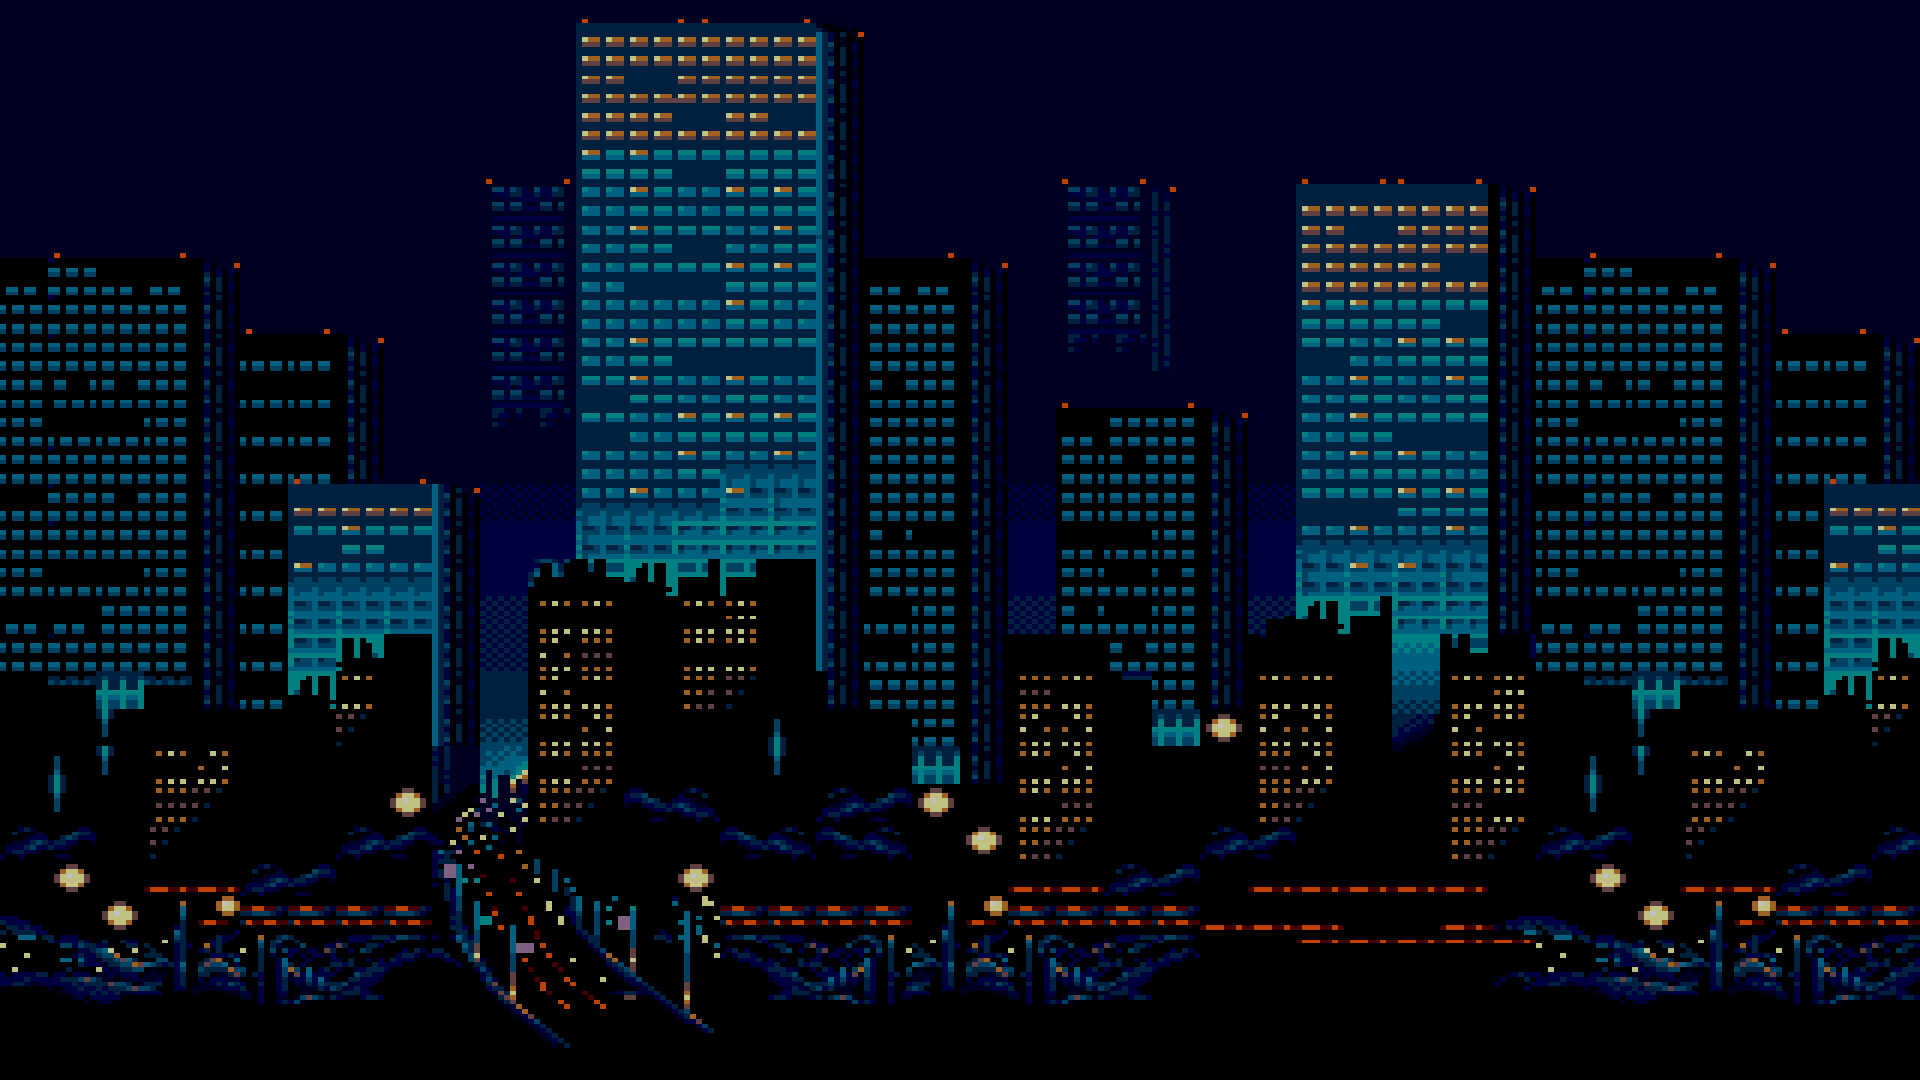 A city at night, pixel art edition. 1920 × 1080